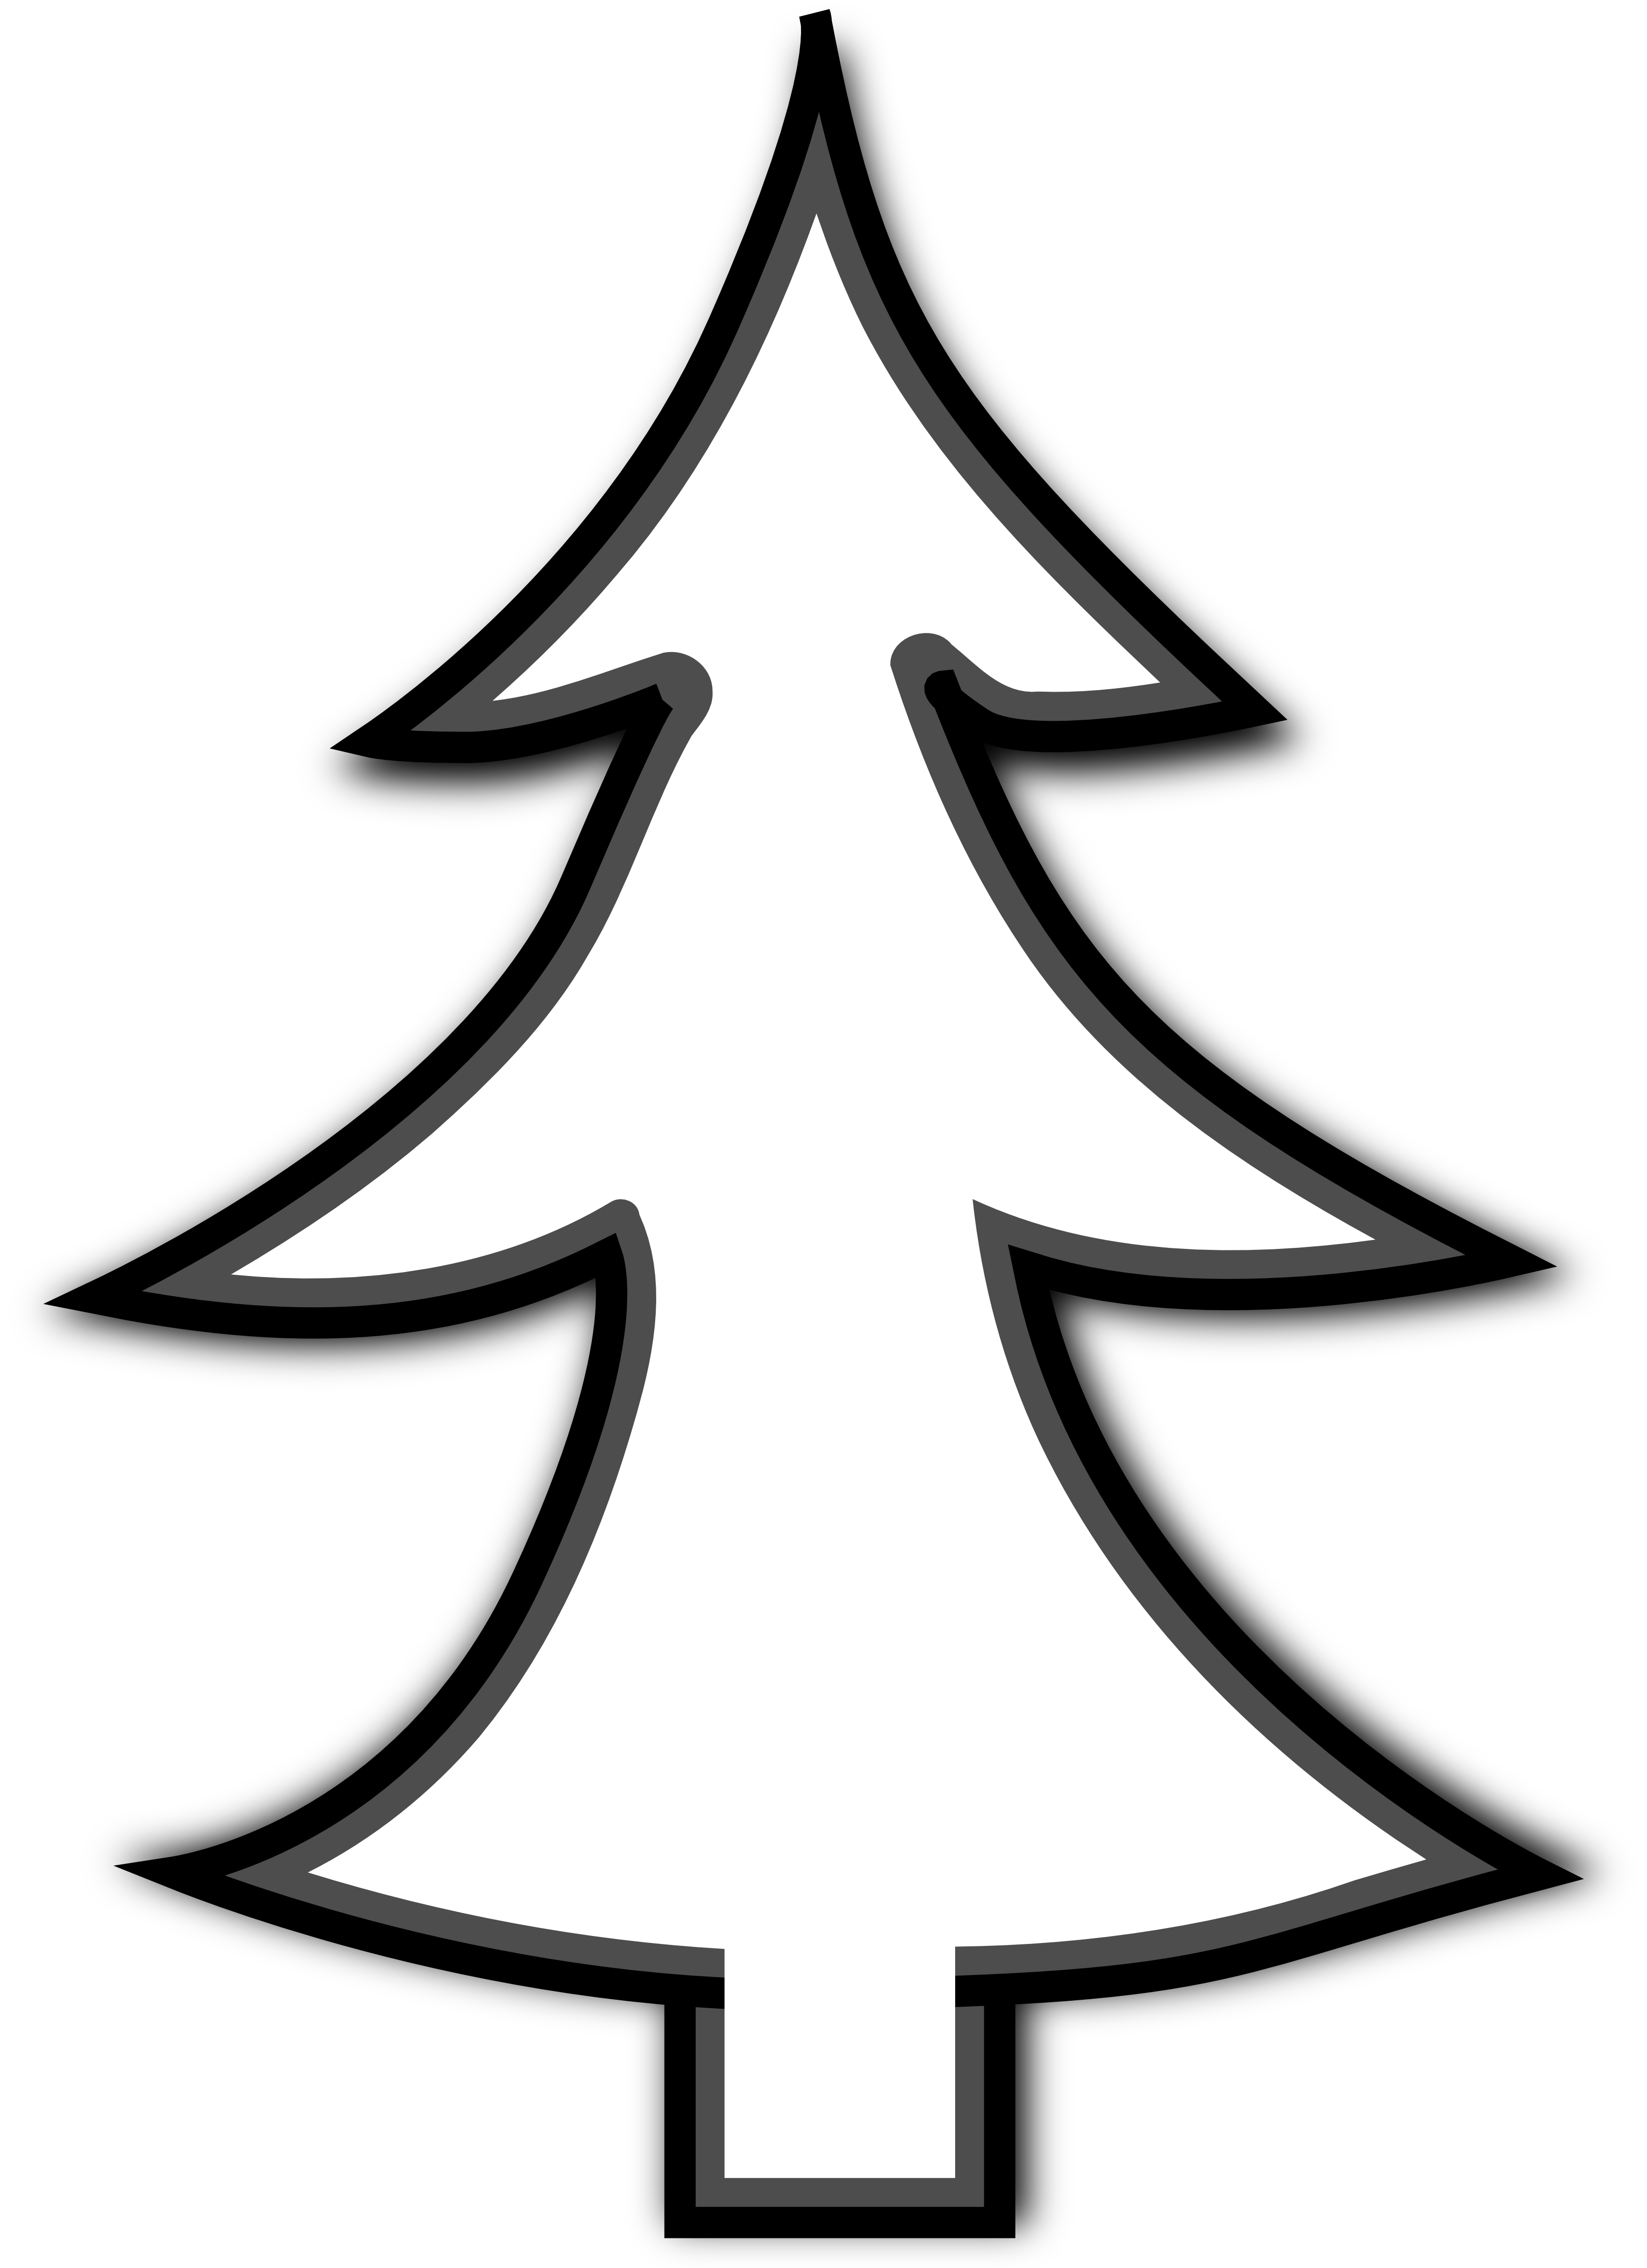 xmas christmas tree 32 black white line art SVG - Clipart library 